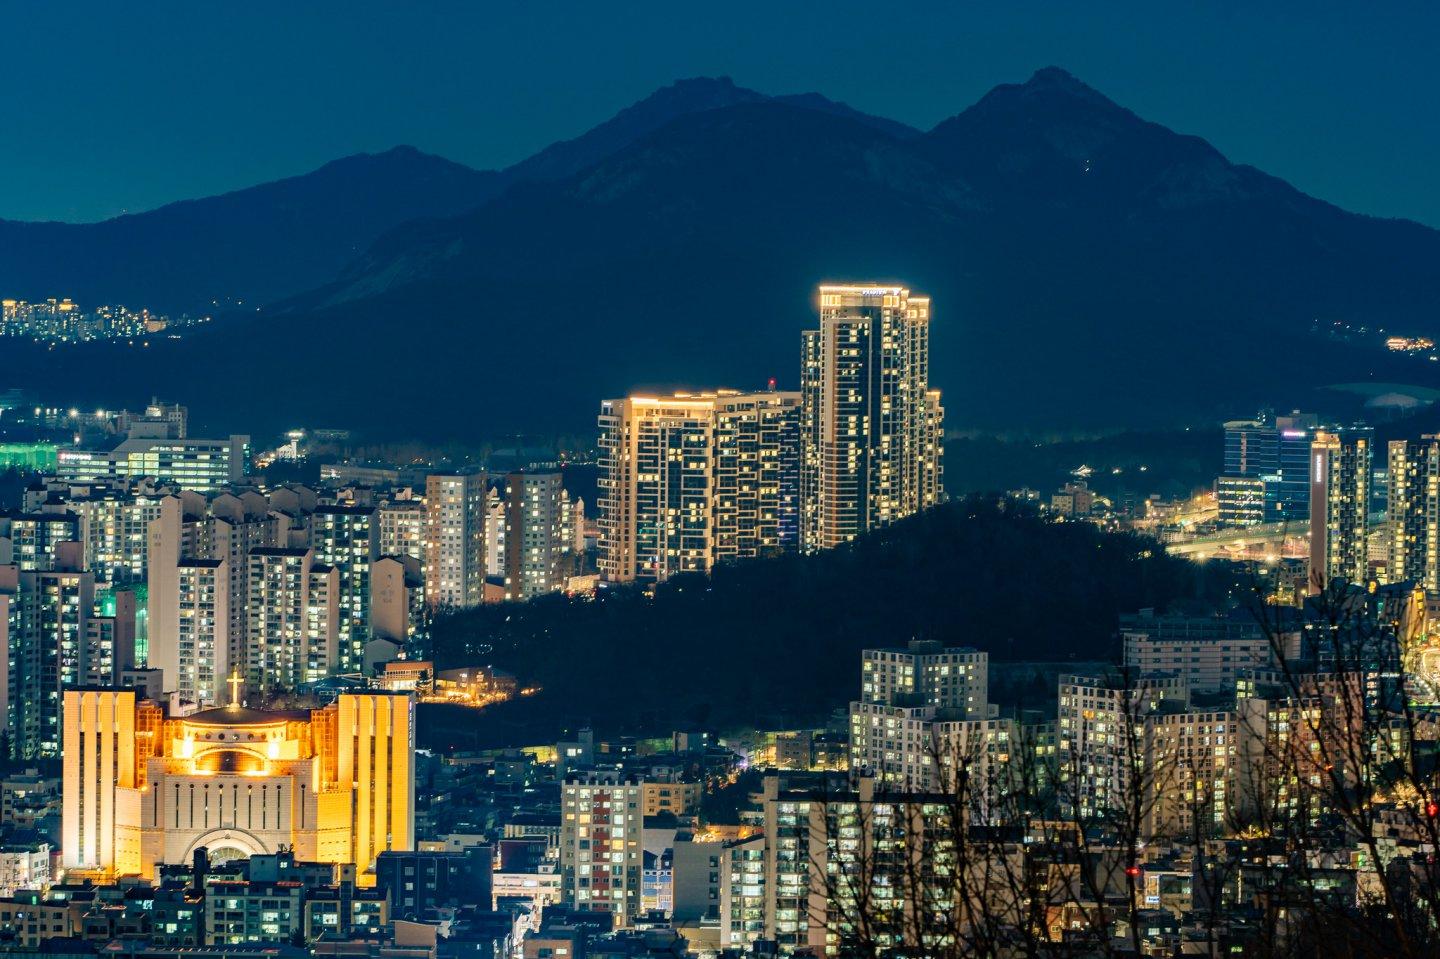 Seoul's eastern night view